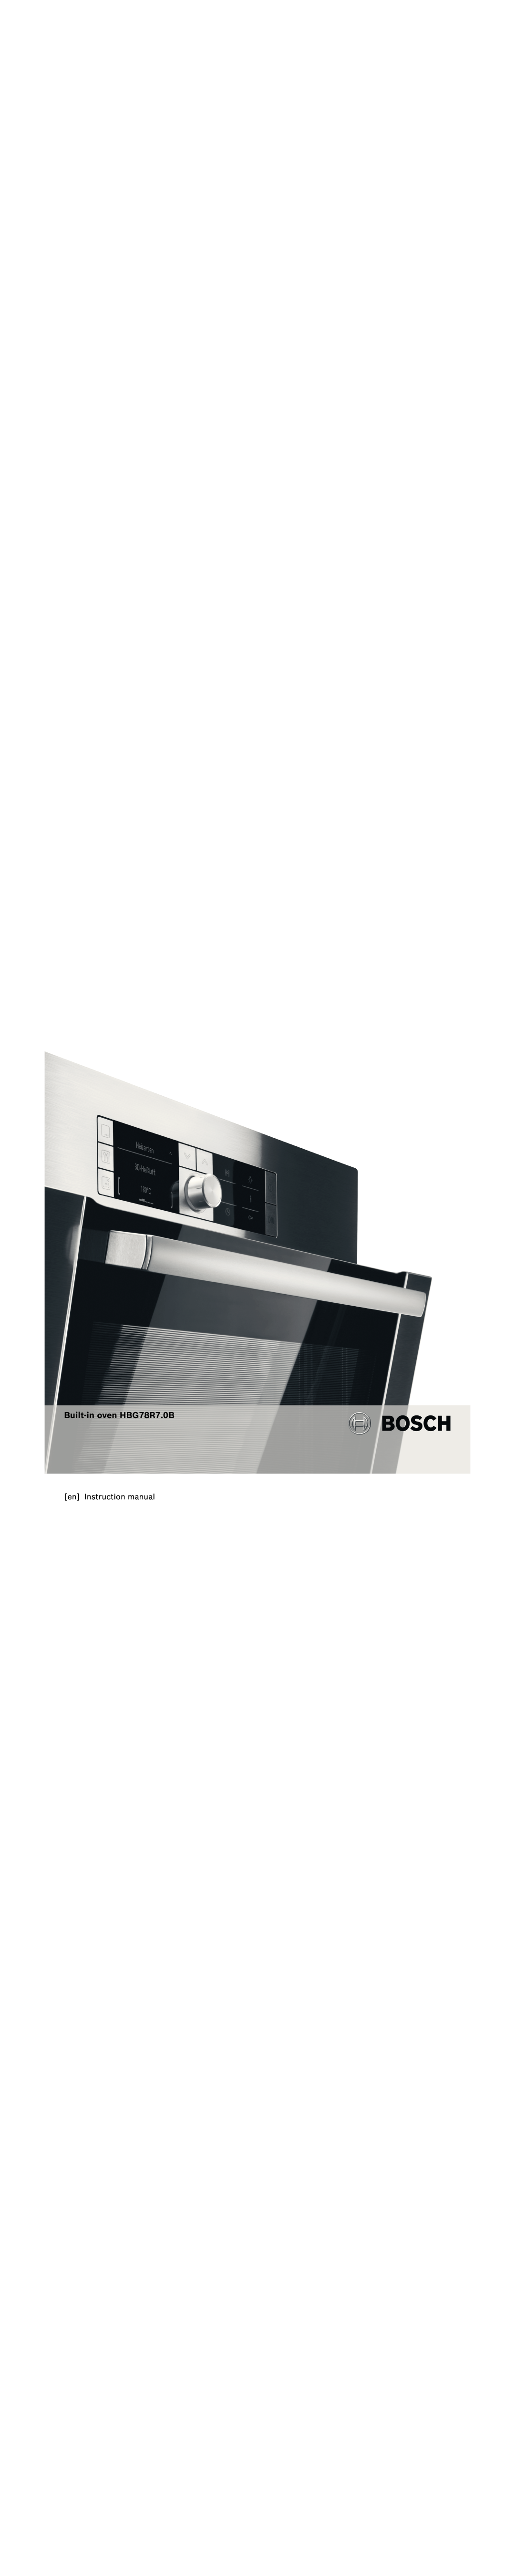 Bosch Appliances instruction manual Built-inoven HBG78R7.0B 